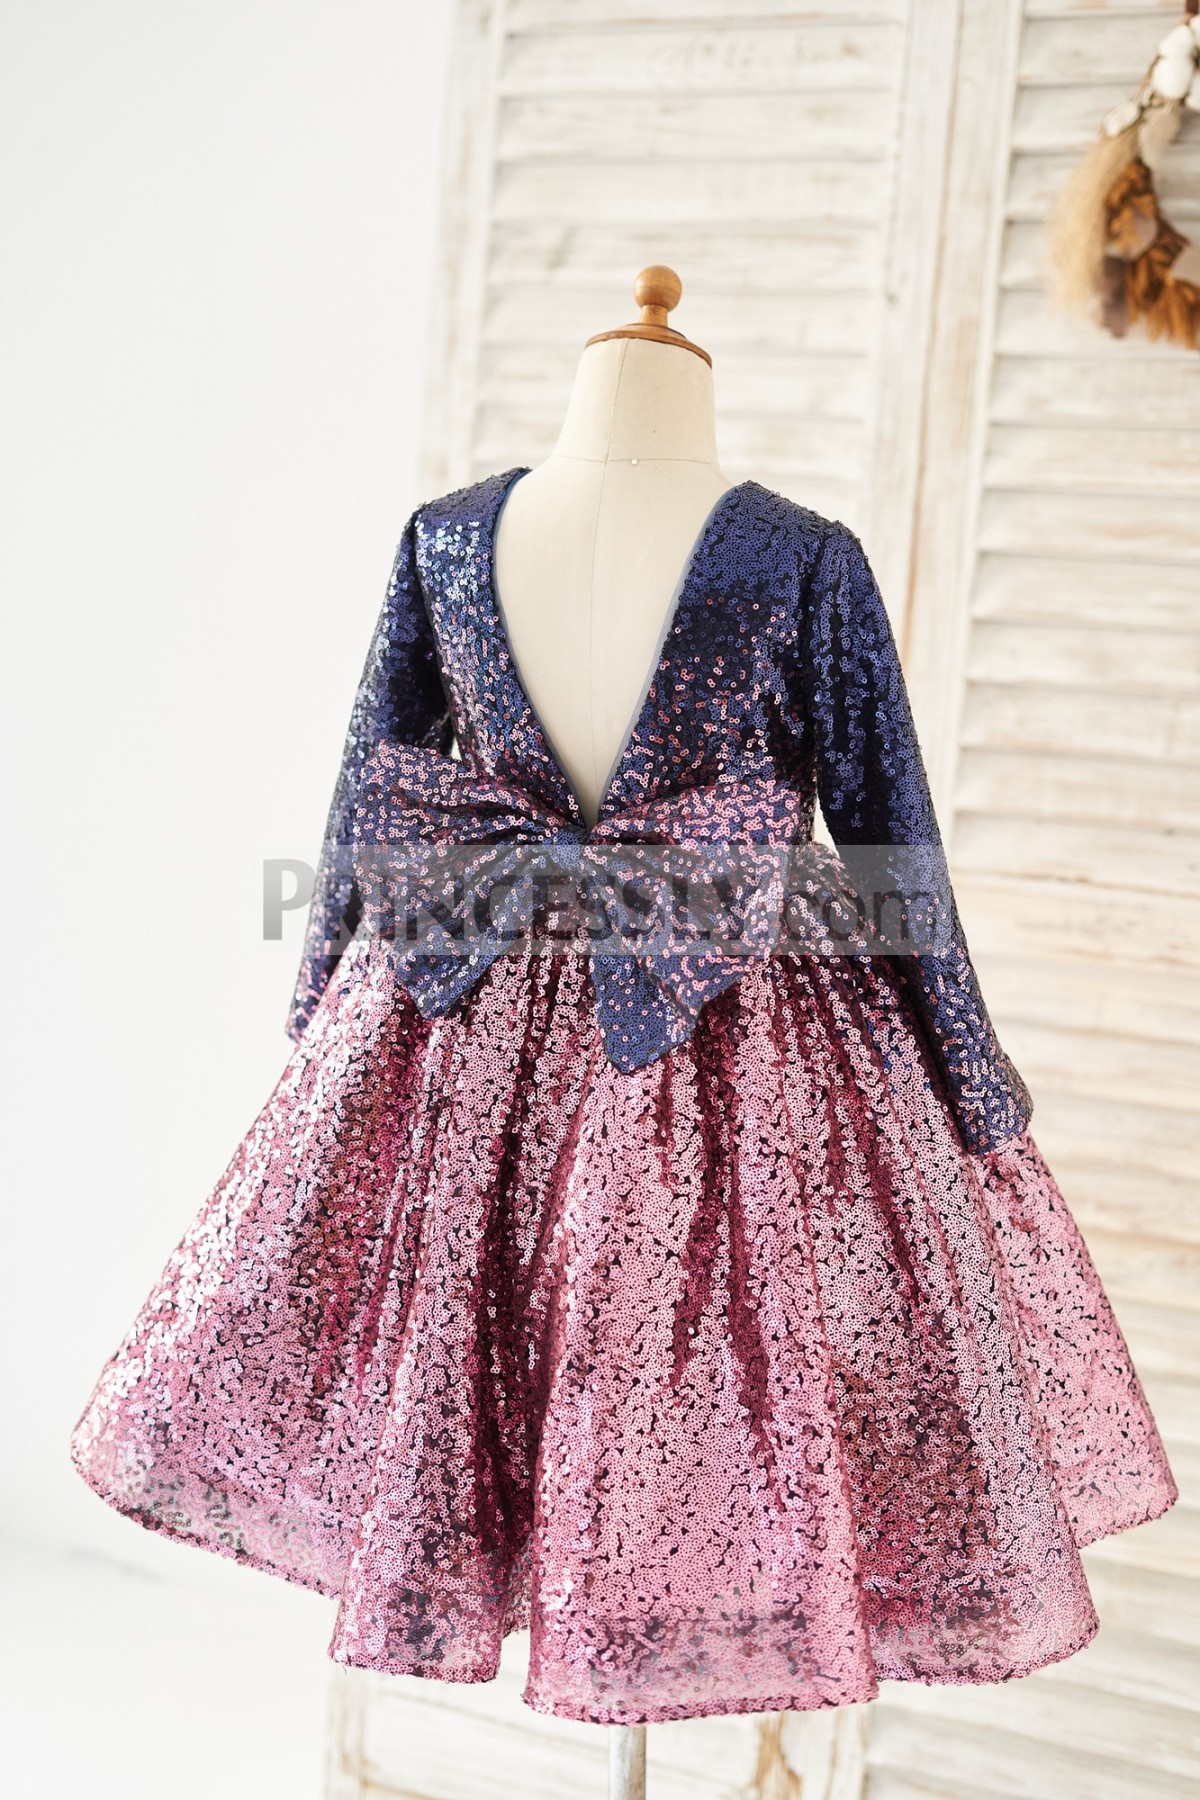 Princessly.com-K1004178-Ombre Navy Pink Sequin V Back Wedding Flower Girl Dress with Bow Kids Party Dress-31